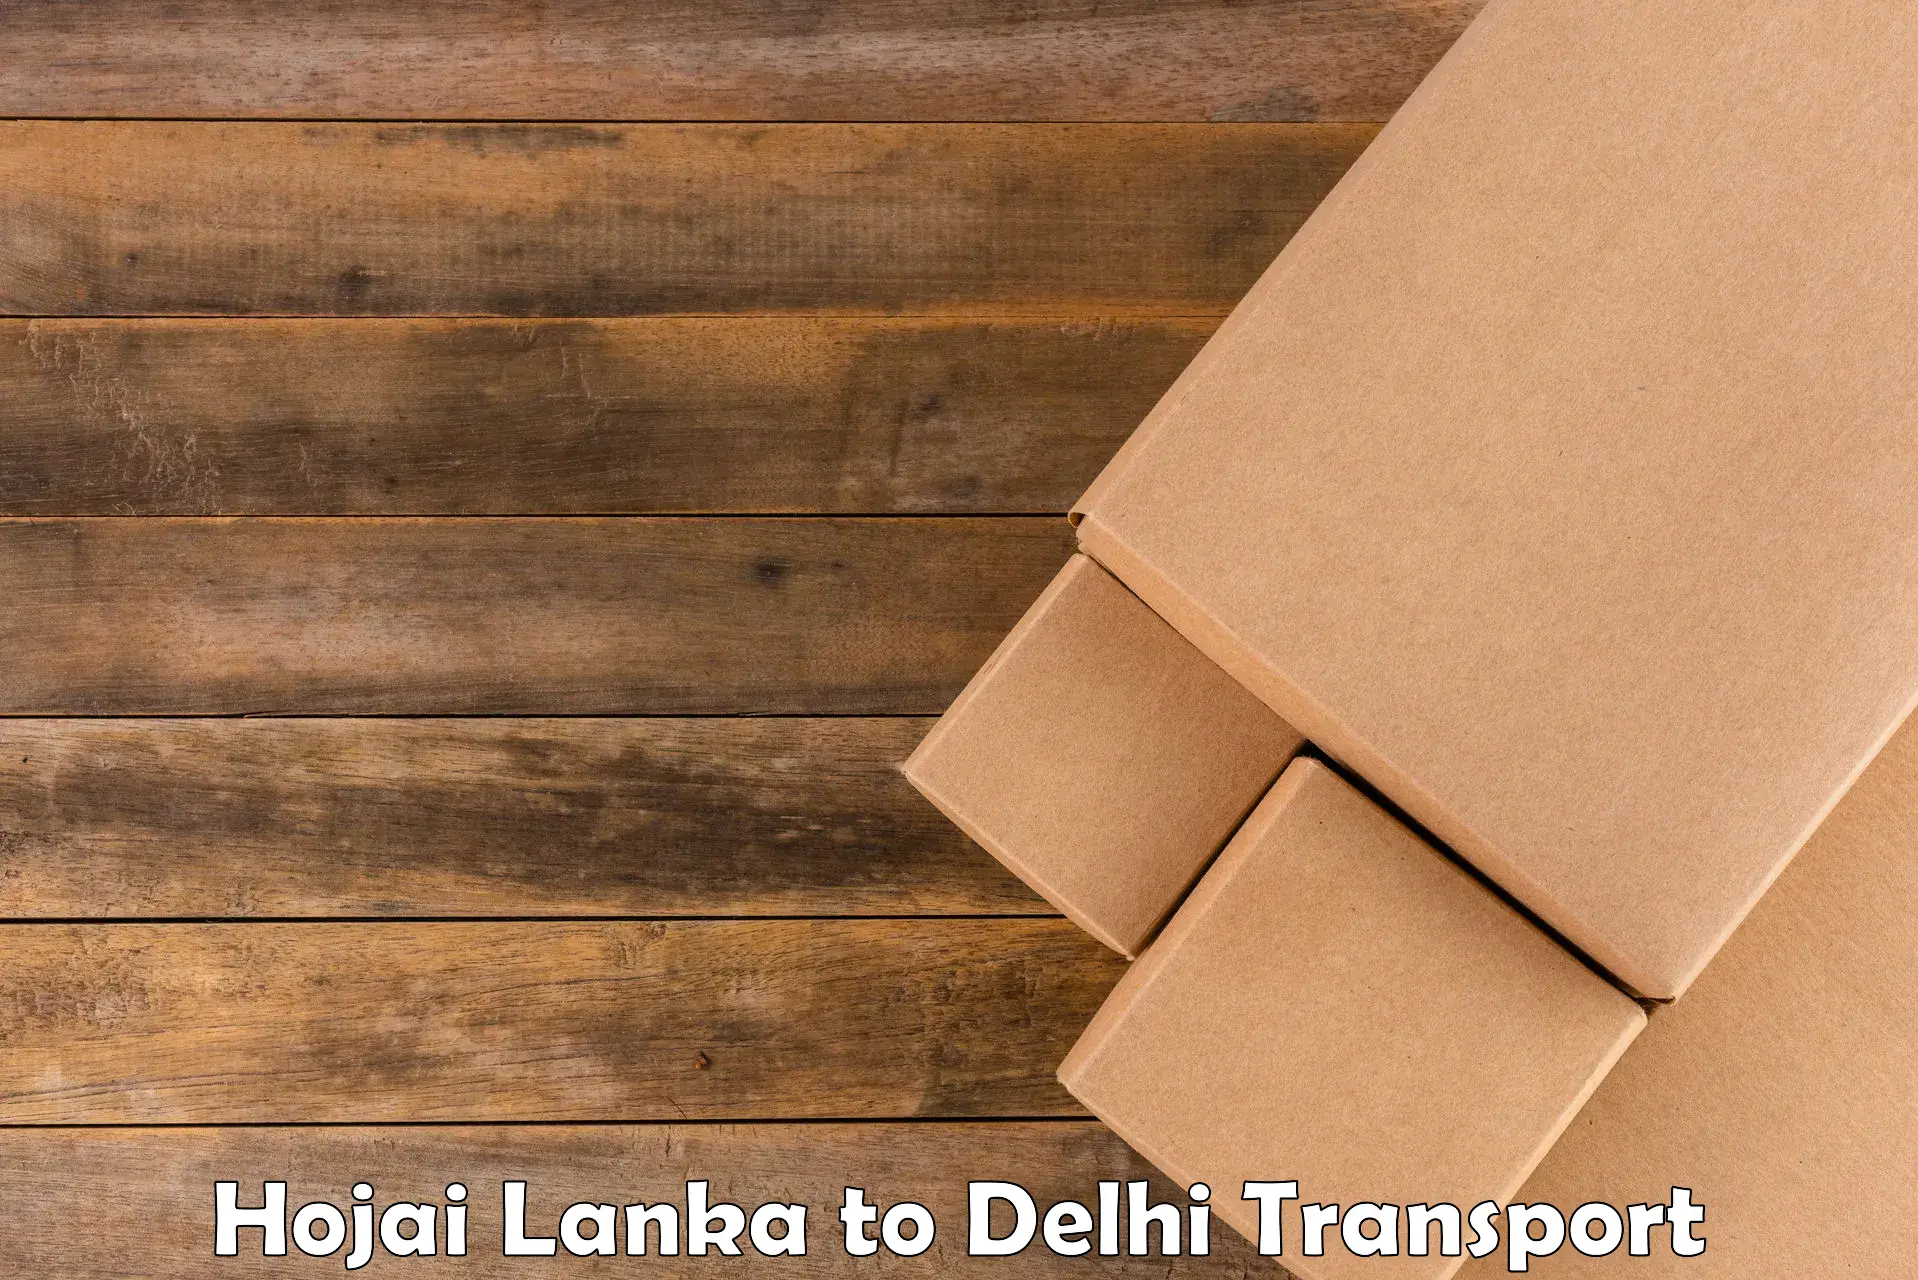 Daily parcel service transport Hojai Lanka to Delhi Technological University DTU